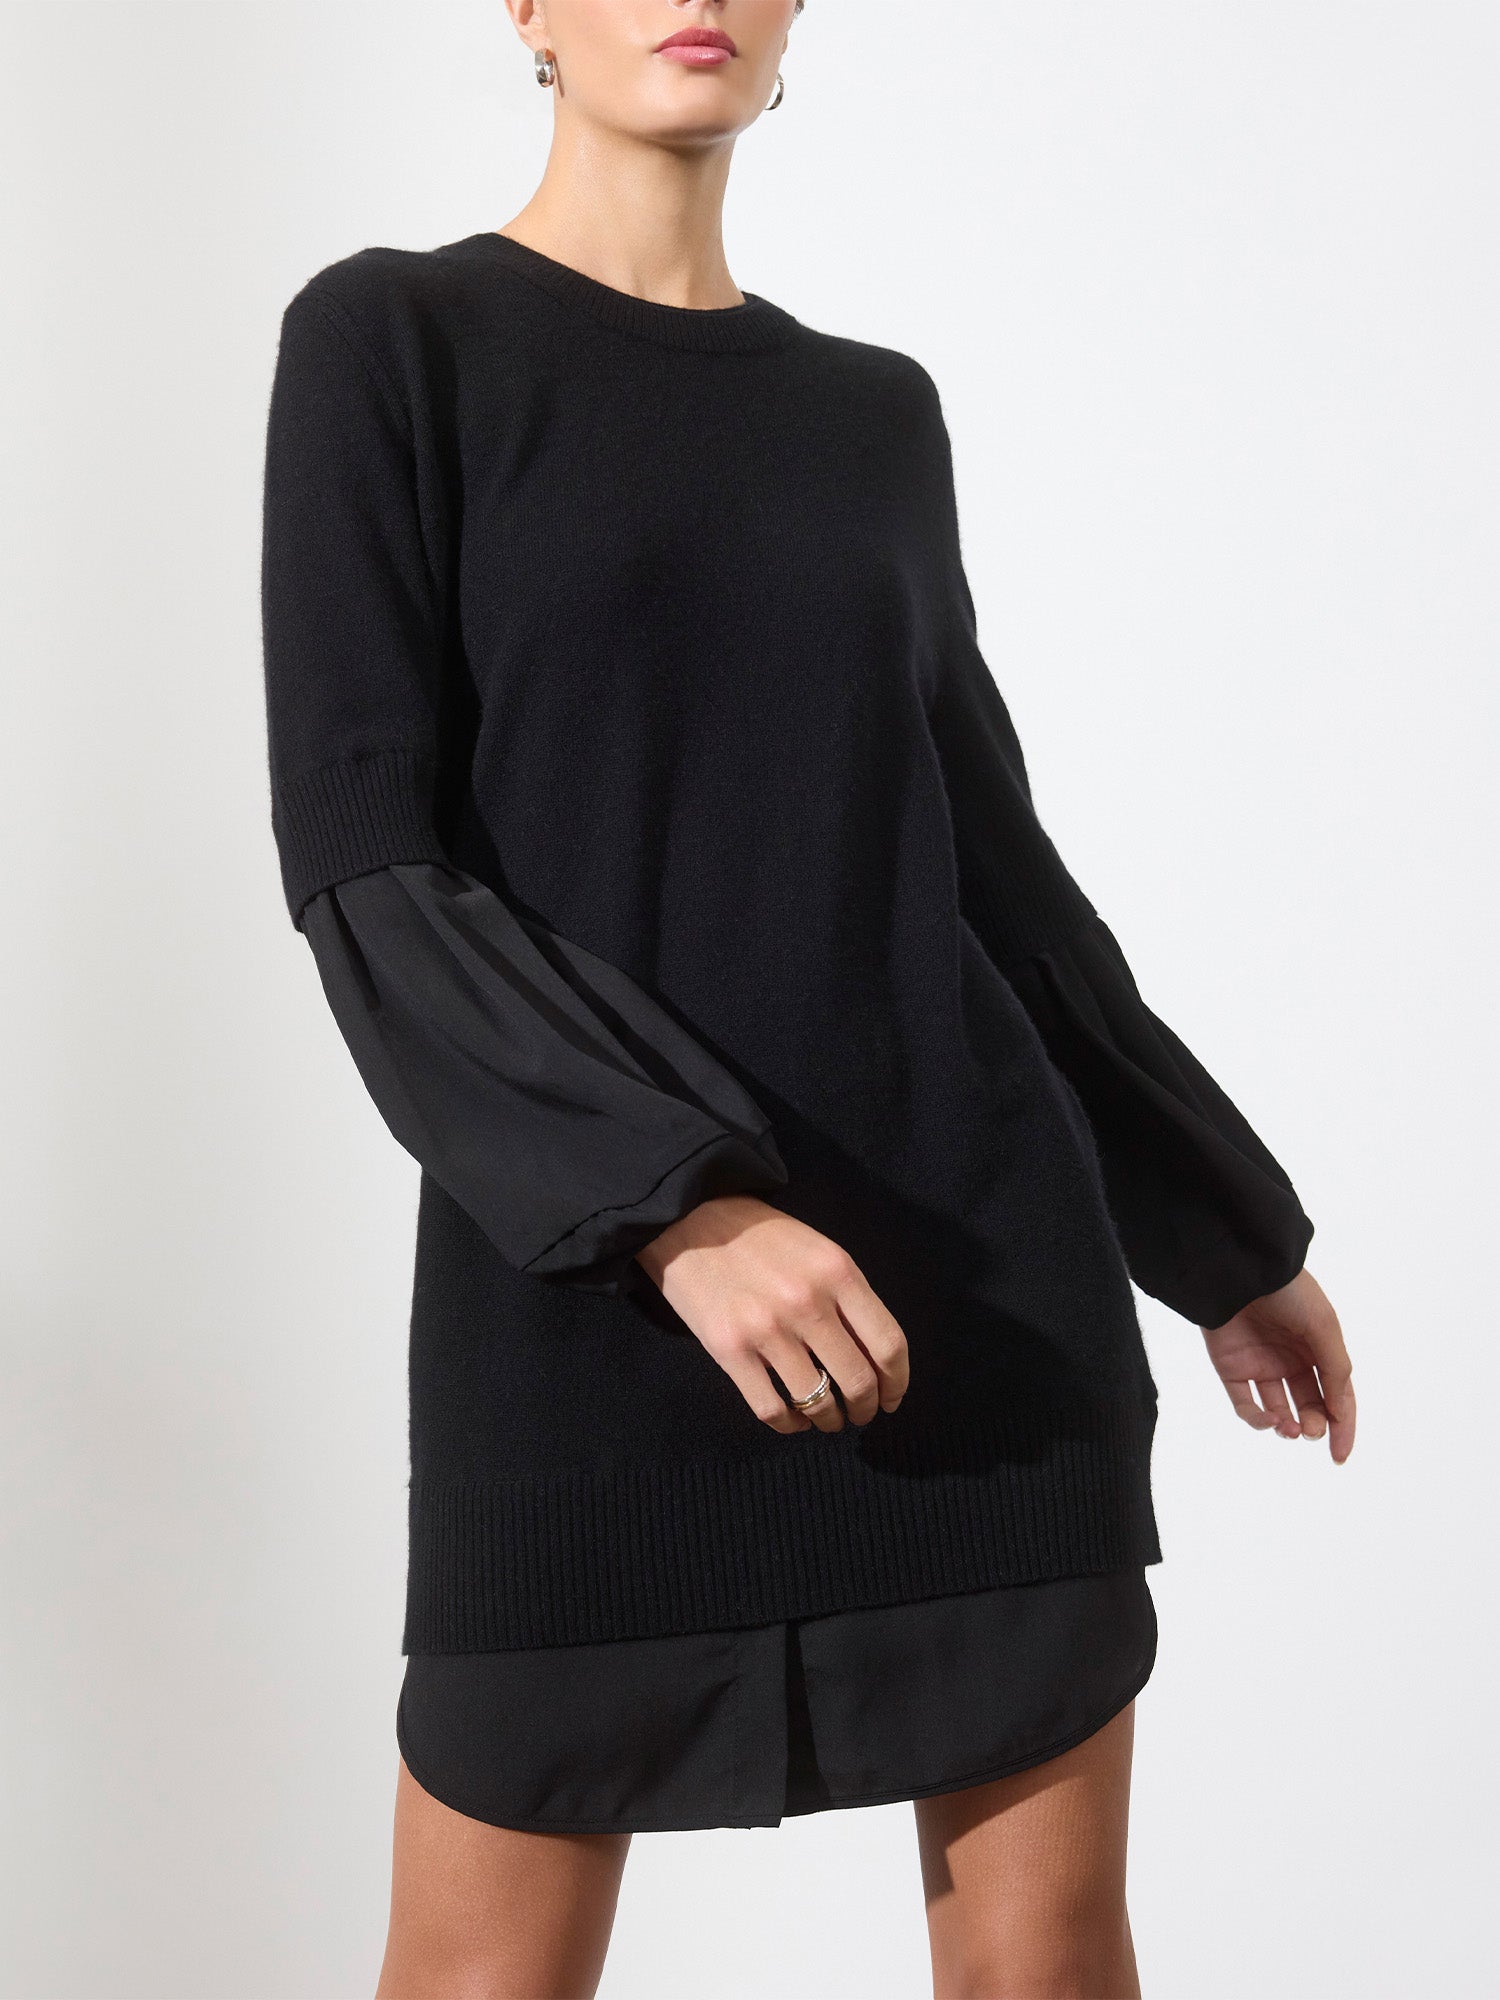 Ebella layered black mini sweater dress front view